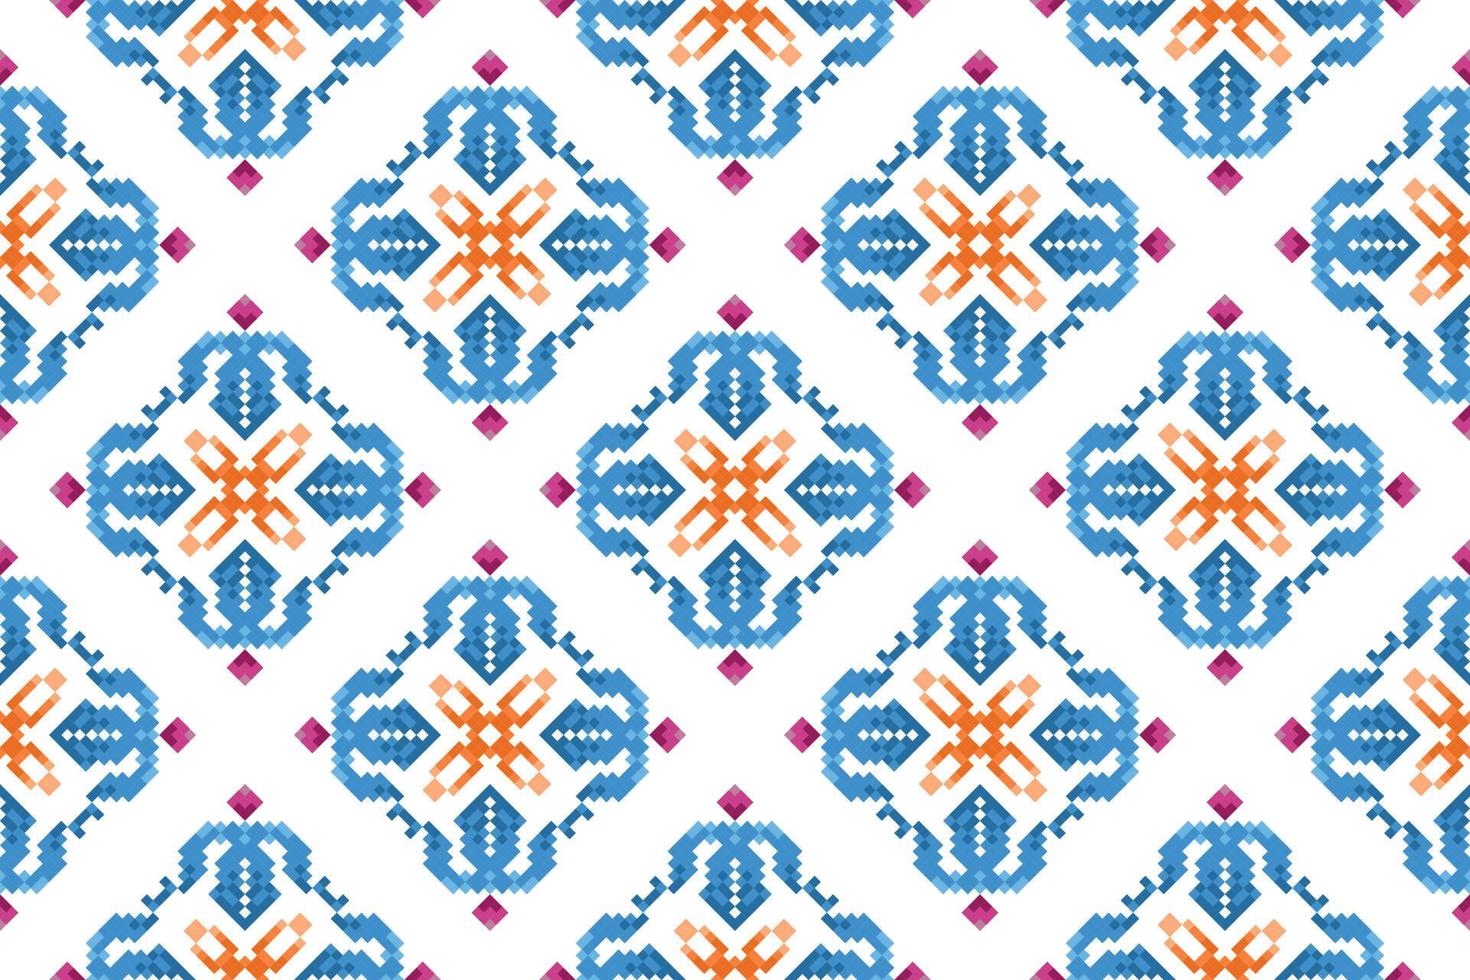 Ikat ethnic seamless pattern decoration design. Aztec fabric carpet boho mandalas textile decor wallpaper. Tribal native motif ornaments traditional embroidery vector background pixel style